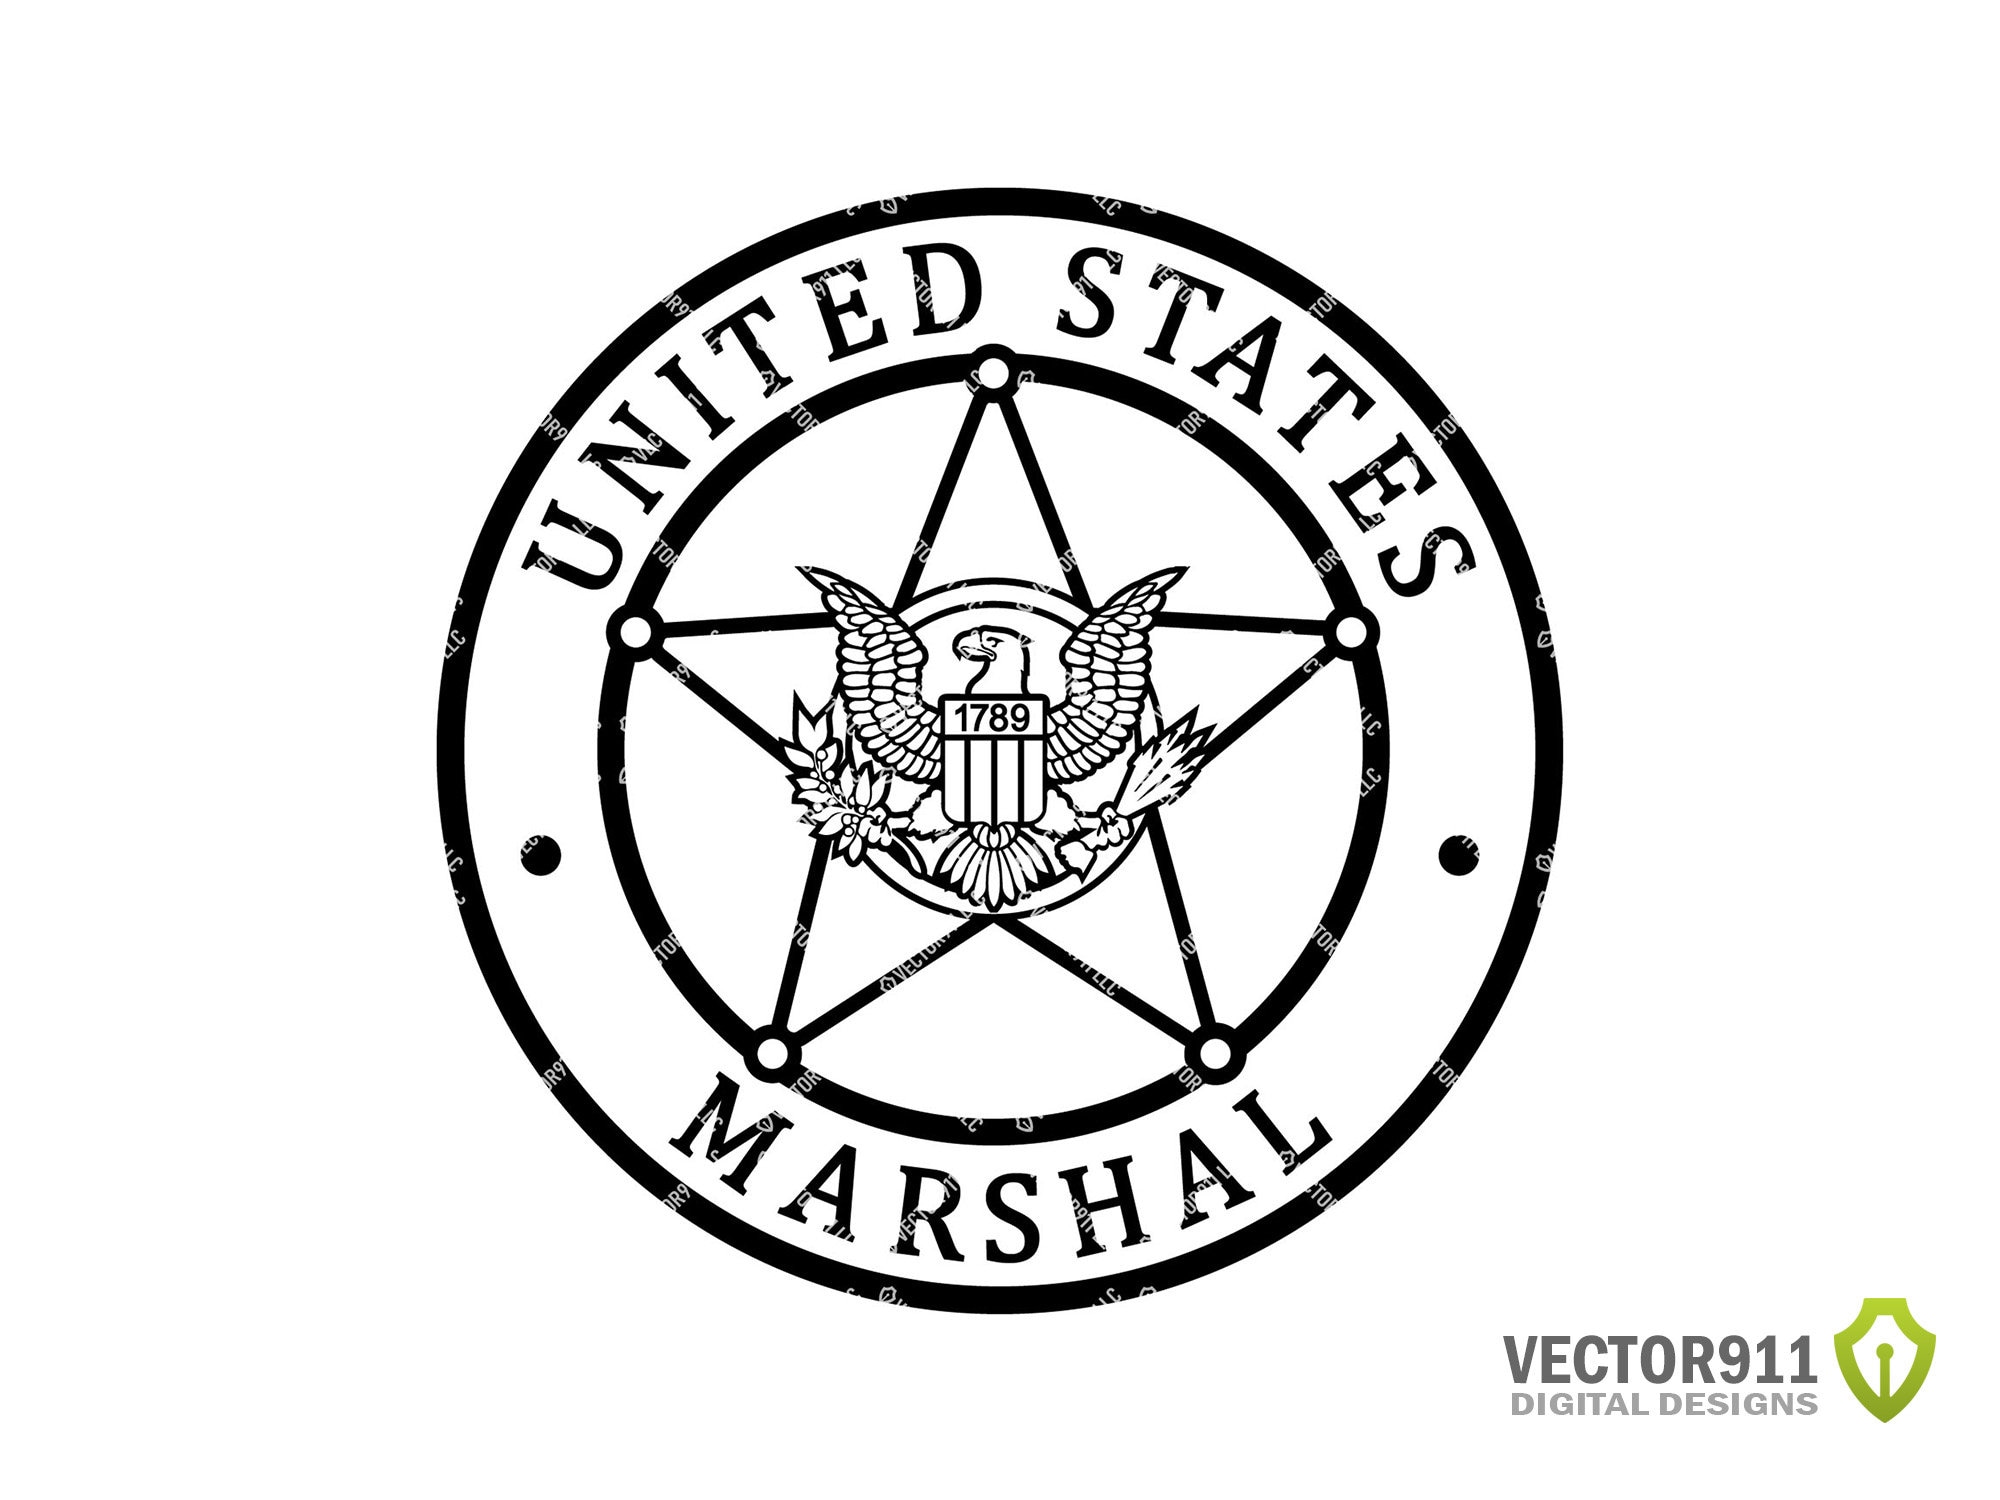 US MARSHALS SERVICE 